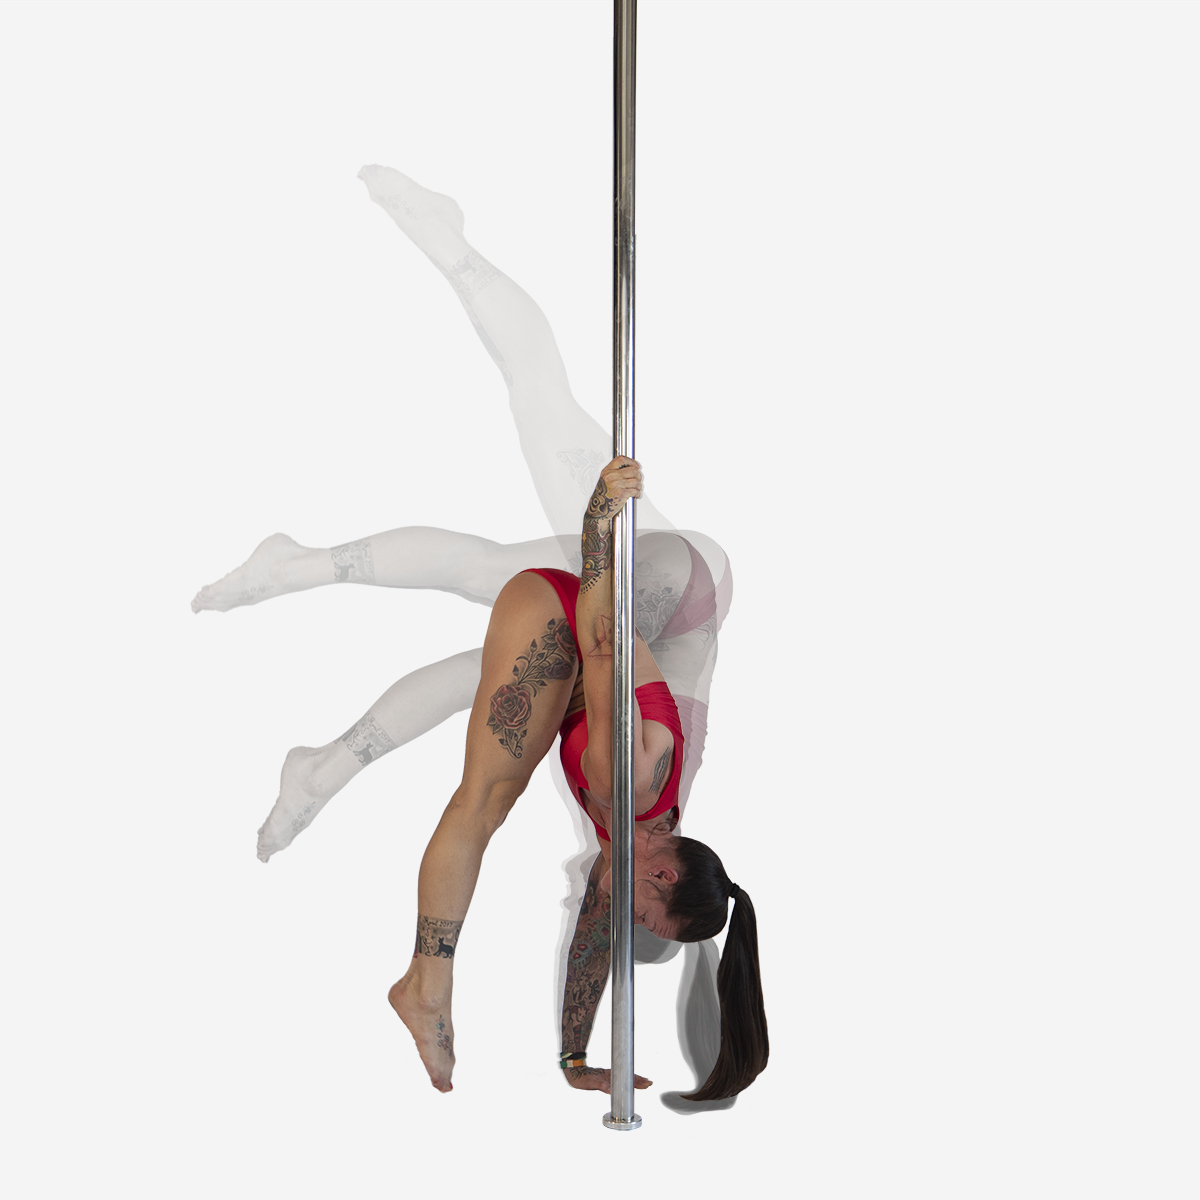 Pole handstand deadlift